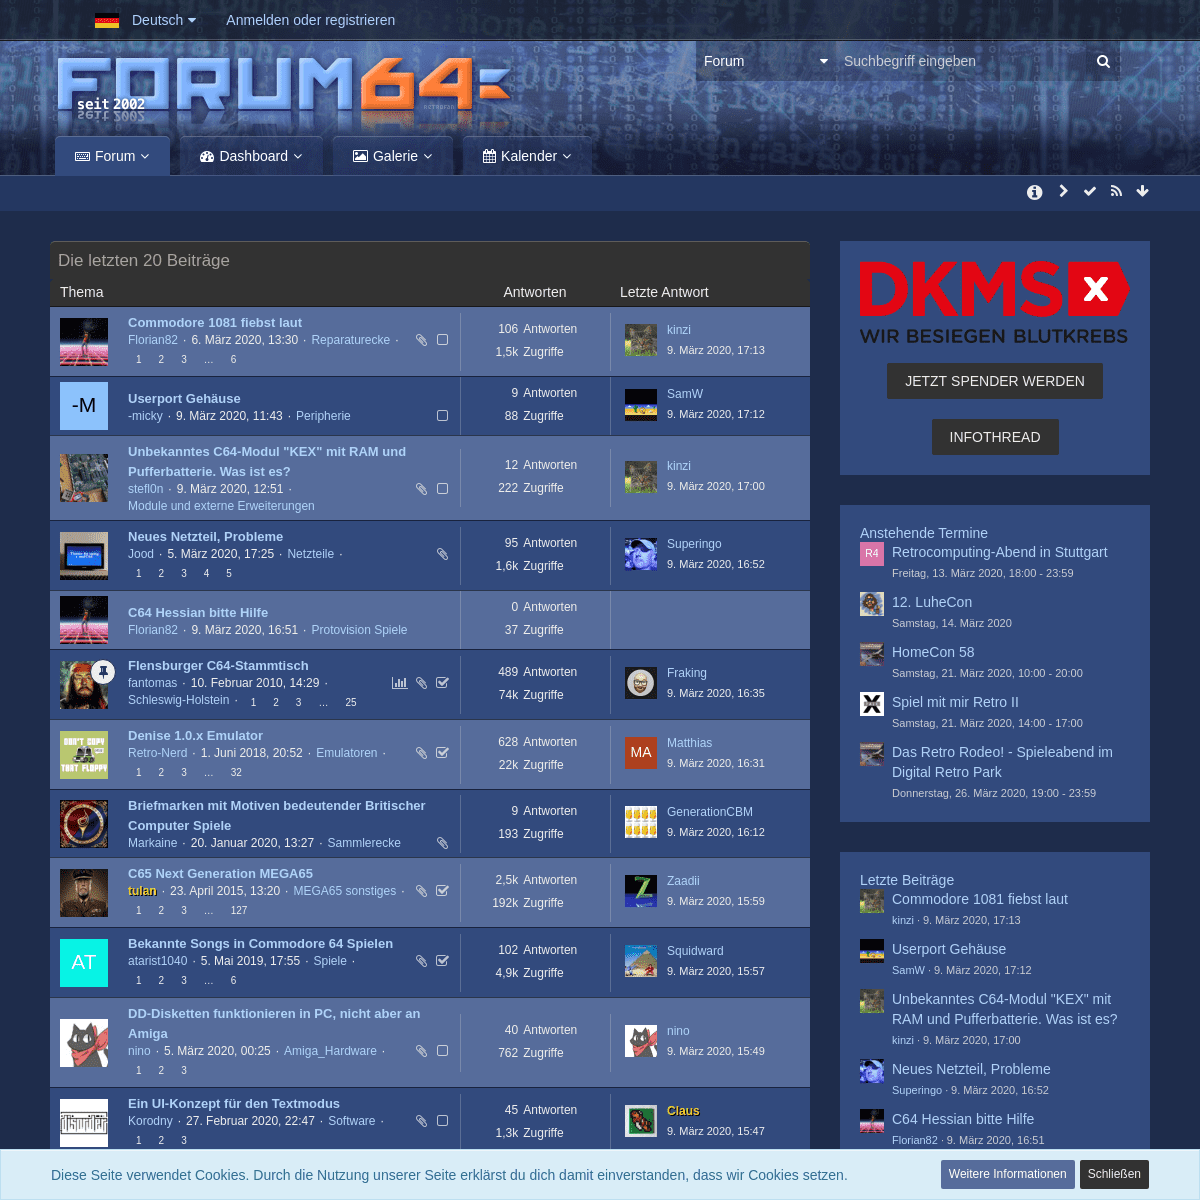 A complete backup of forum64.de